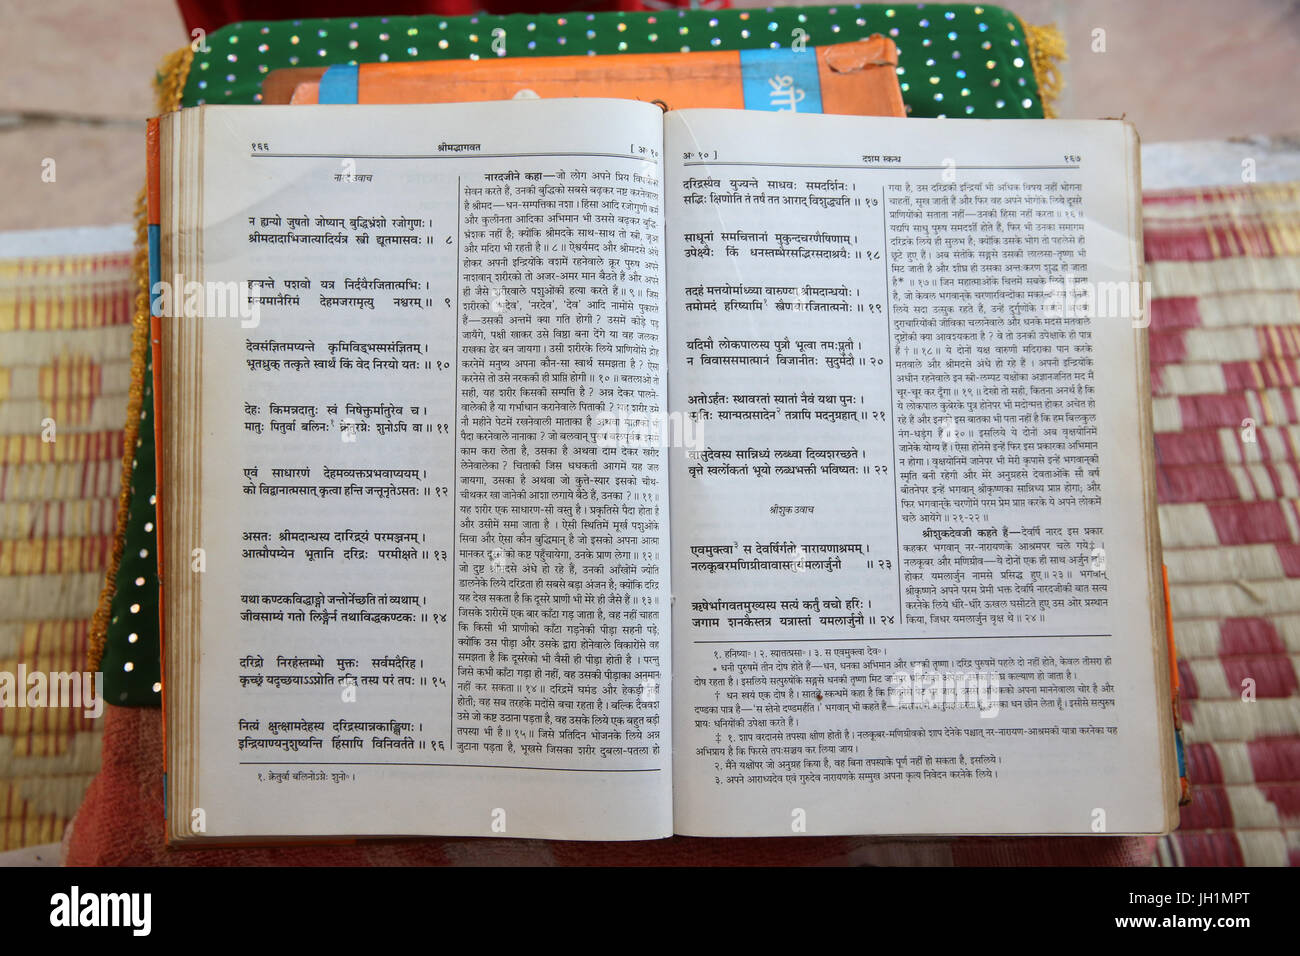 SRIMAD BHAGAVATAM. Verse in sanskrit and Hindi translation. India. Stock Photo